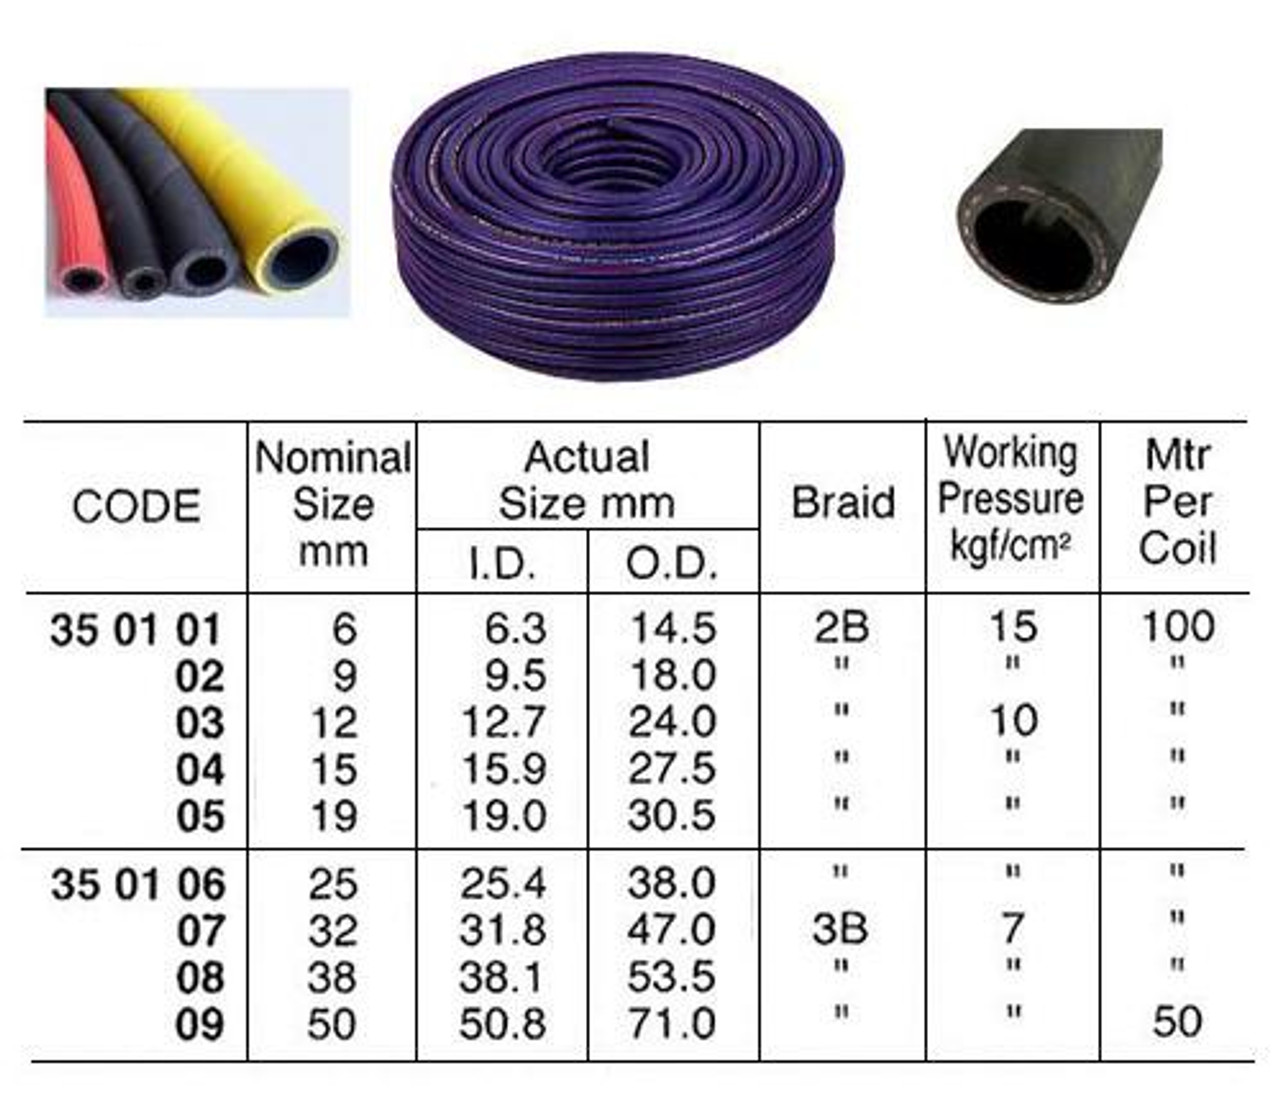 IMPA 350106 Rubber air hose Nominal size 25mm - price per meter